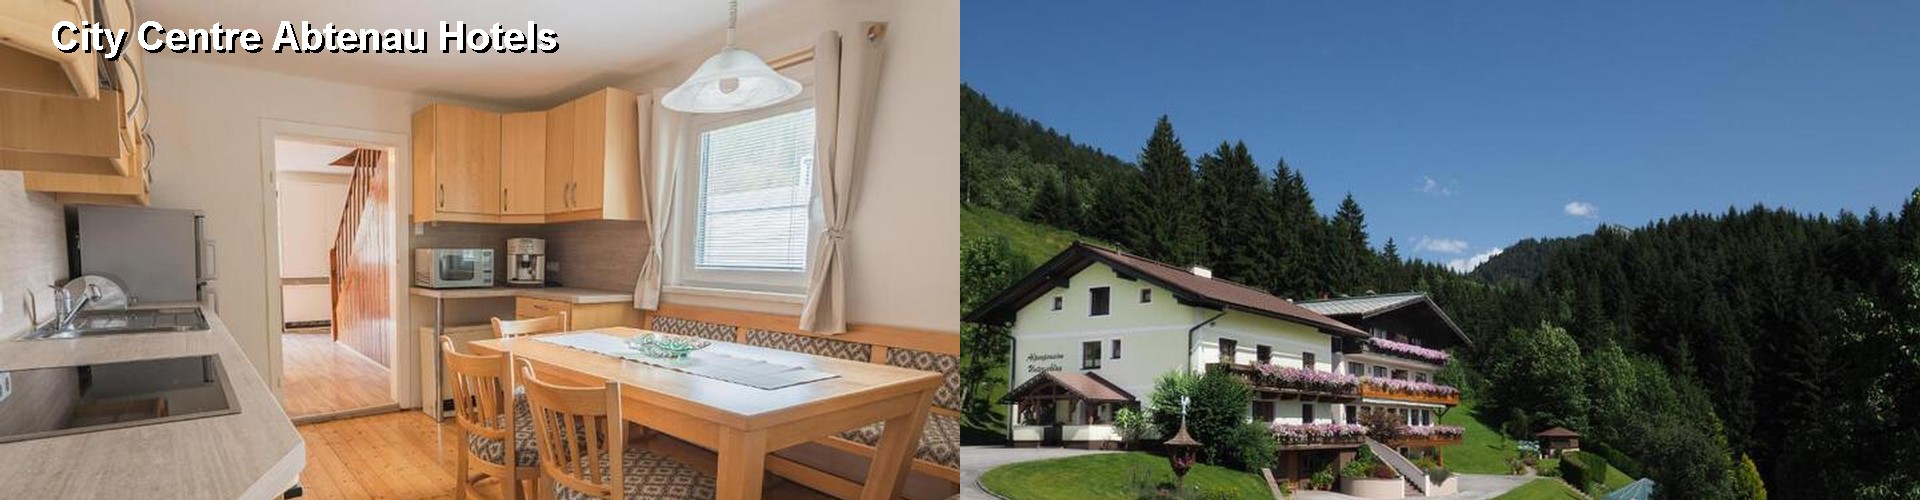 5 Best Hotels near City Centre Abtenau